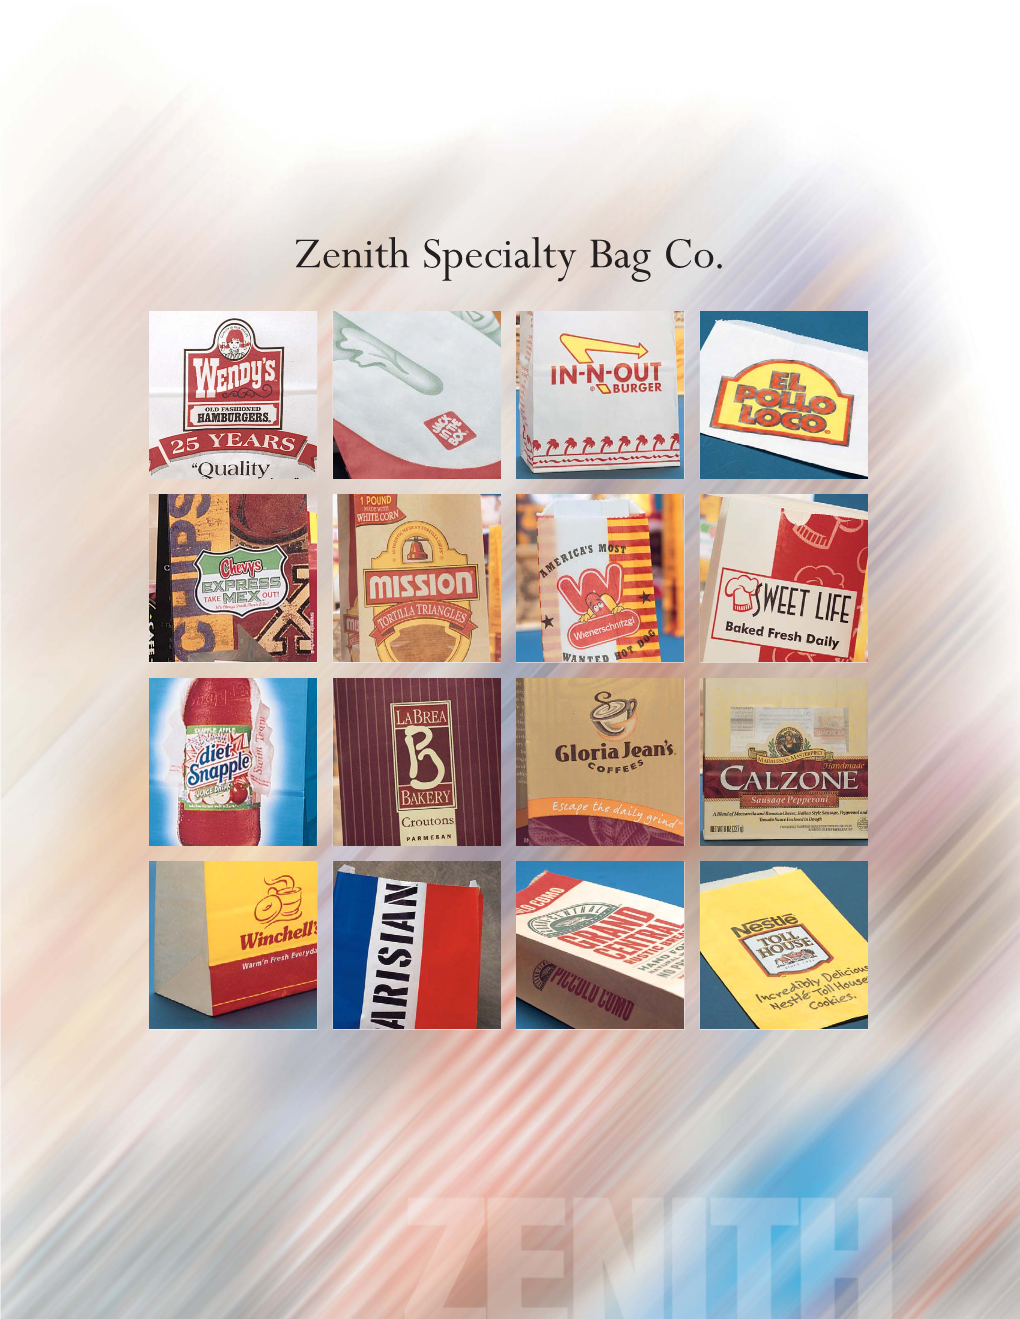 Zenith Specialty Bag Co